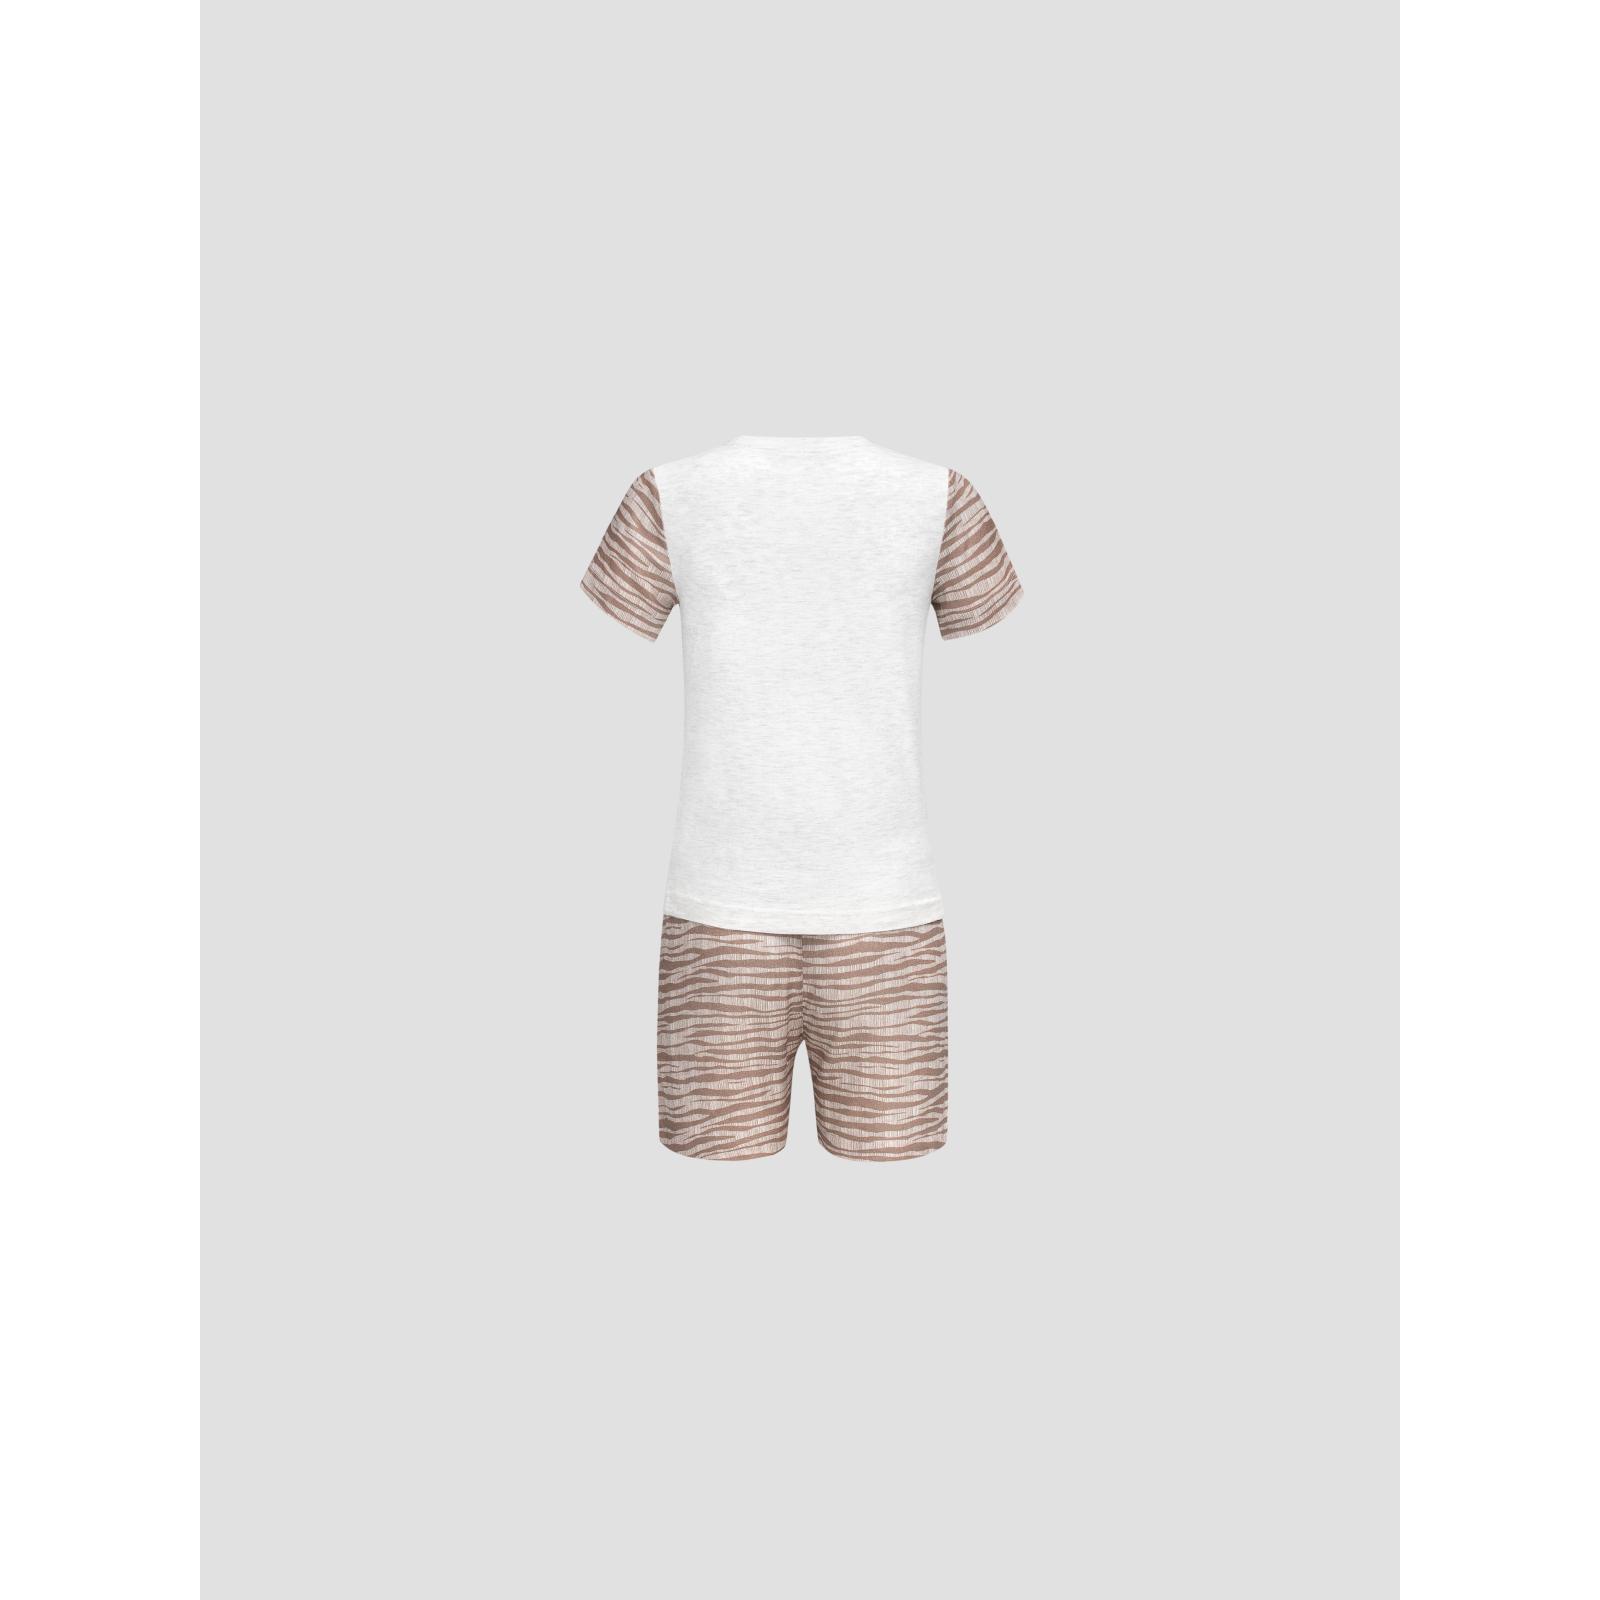 Пижама для мальчиков Kids by togas Сафари бежевый 116-122 см, размер 116-122 см - фото 2